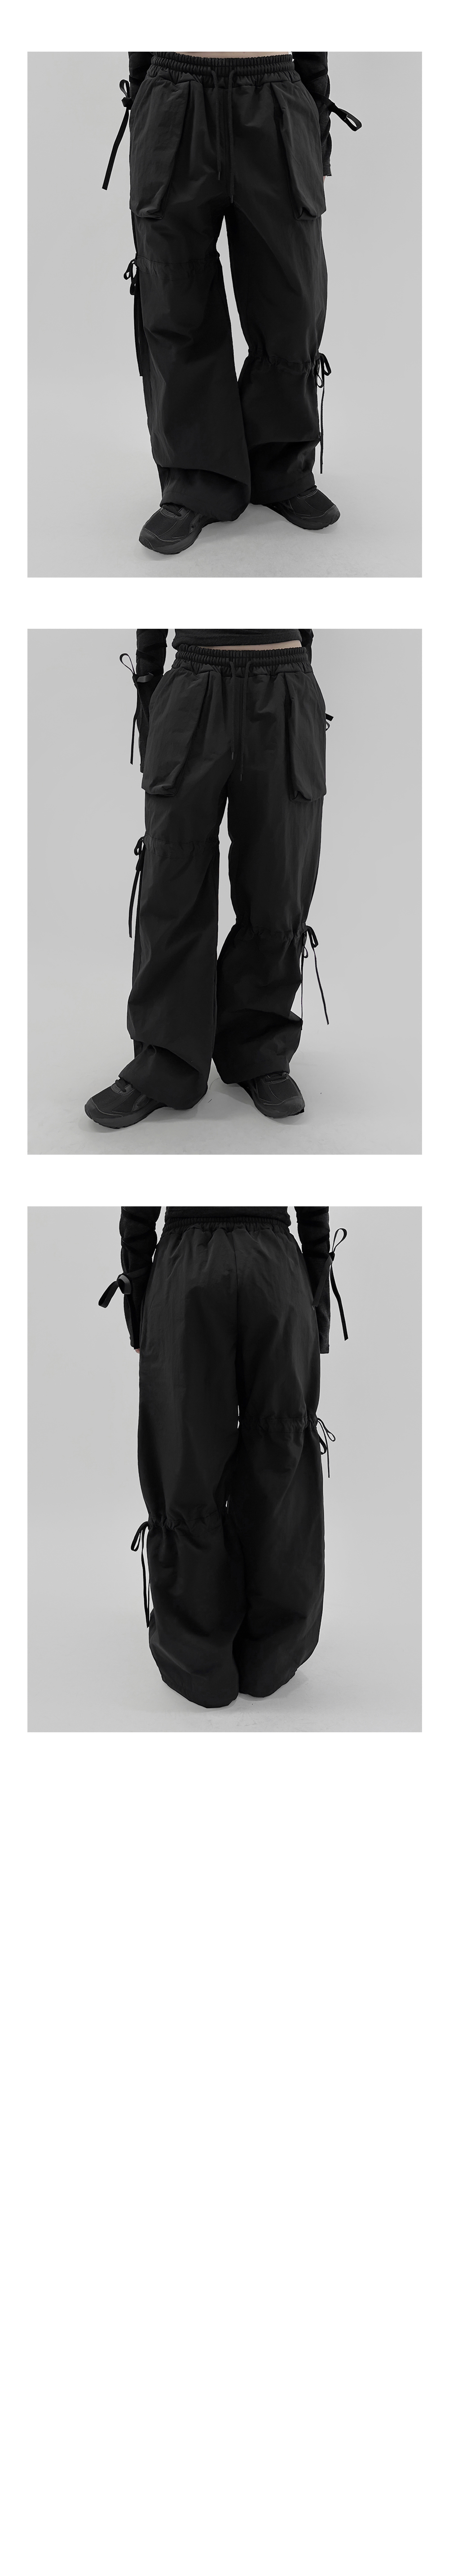 suspenders skirt/pants model image-S1L10